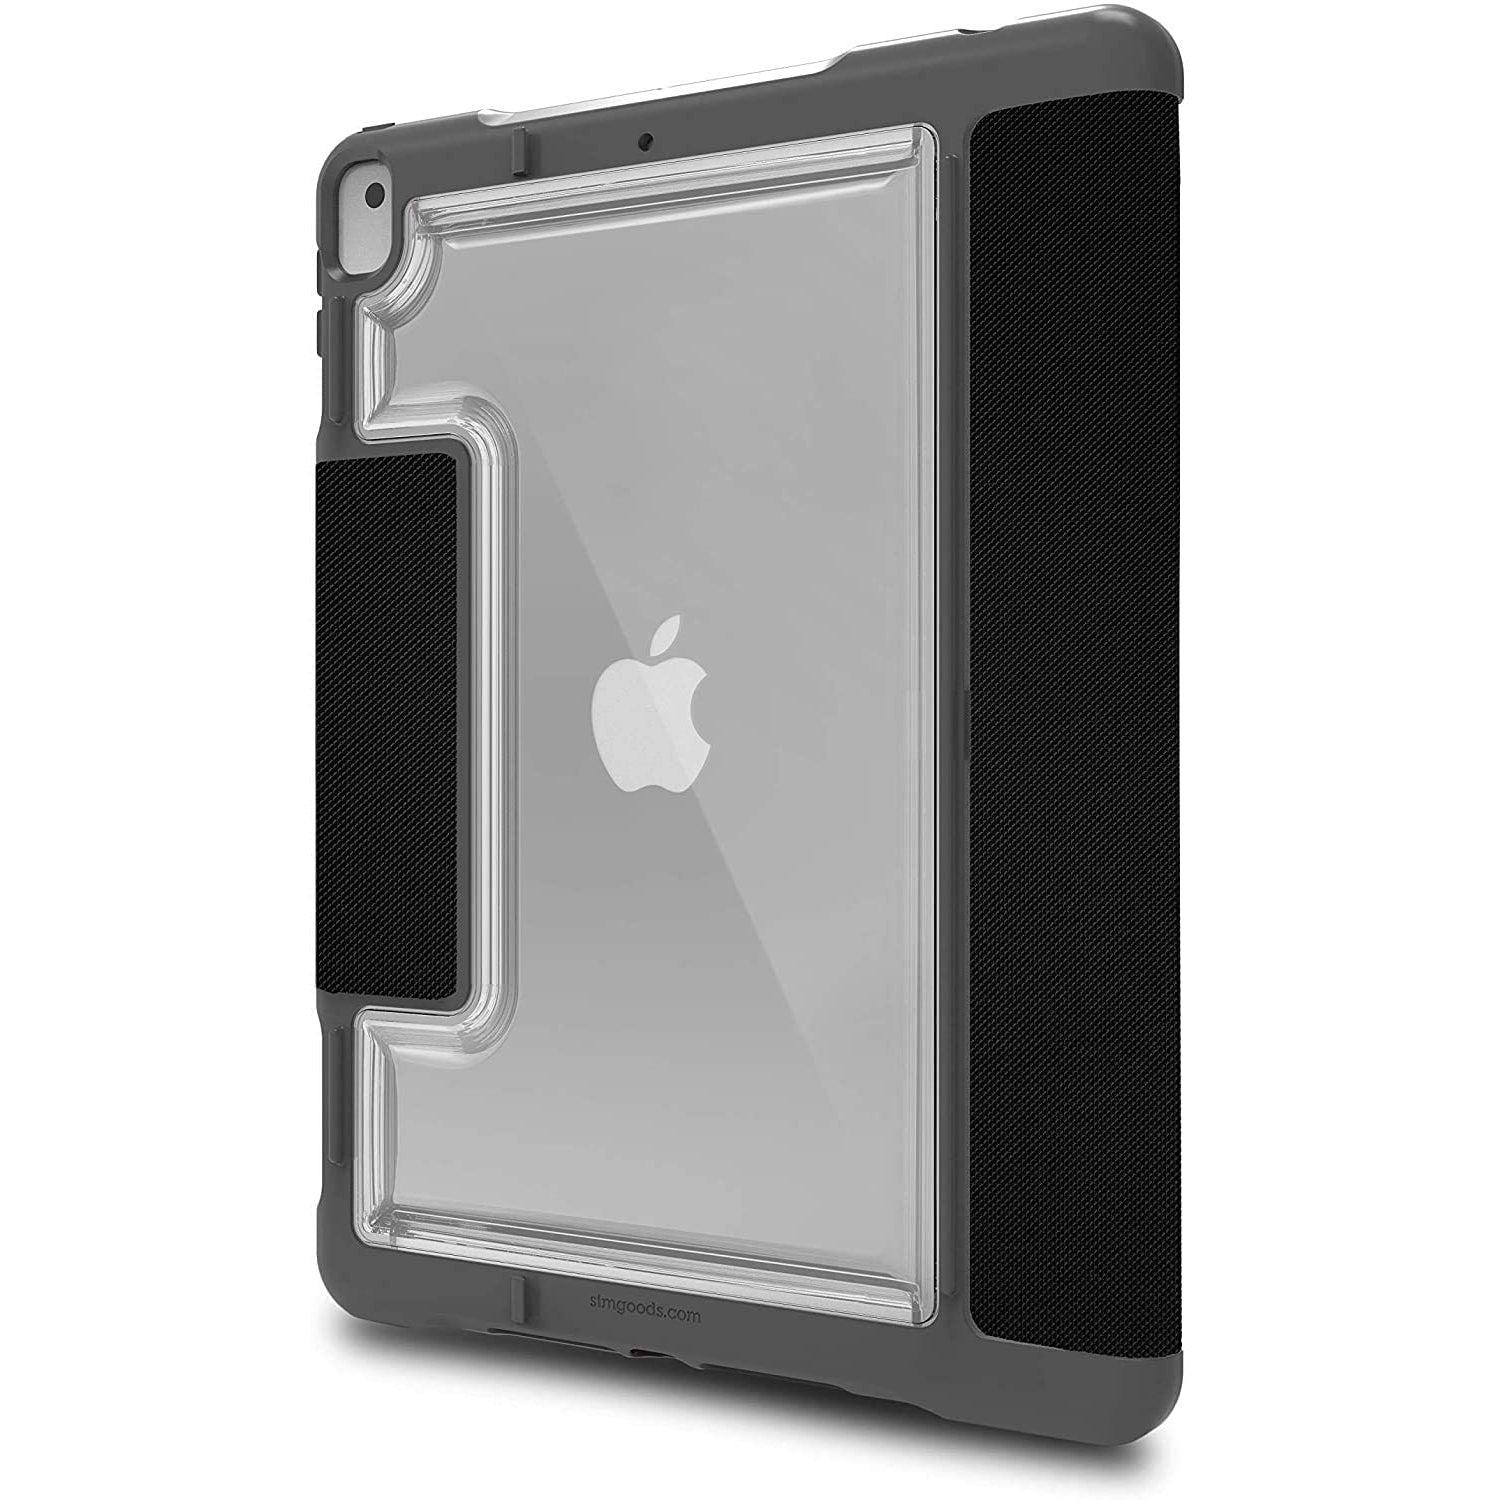 STM Dux Plus Duo Case for iPad 7th Generation - Black